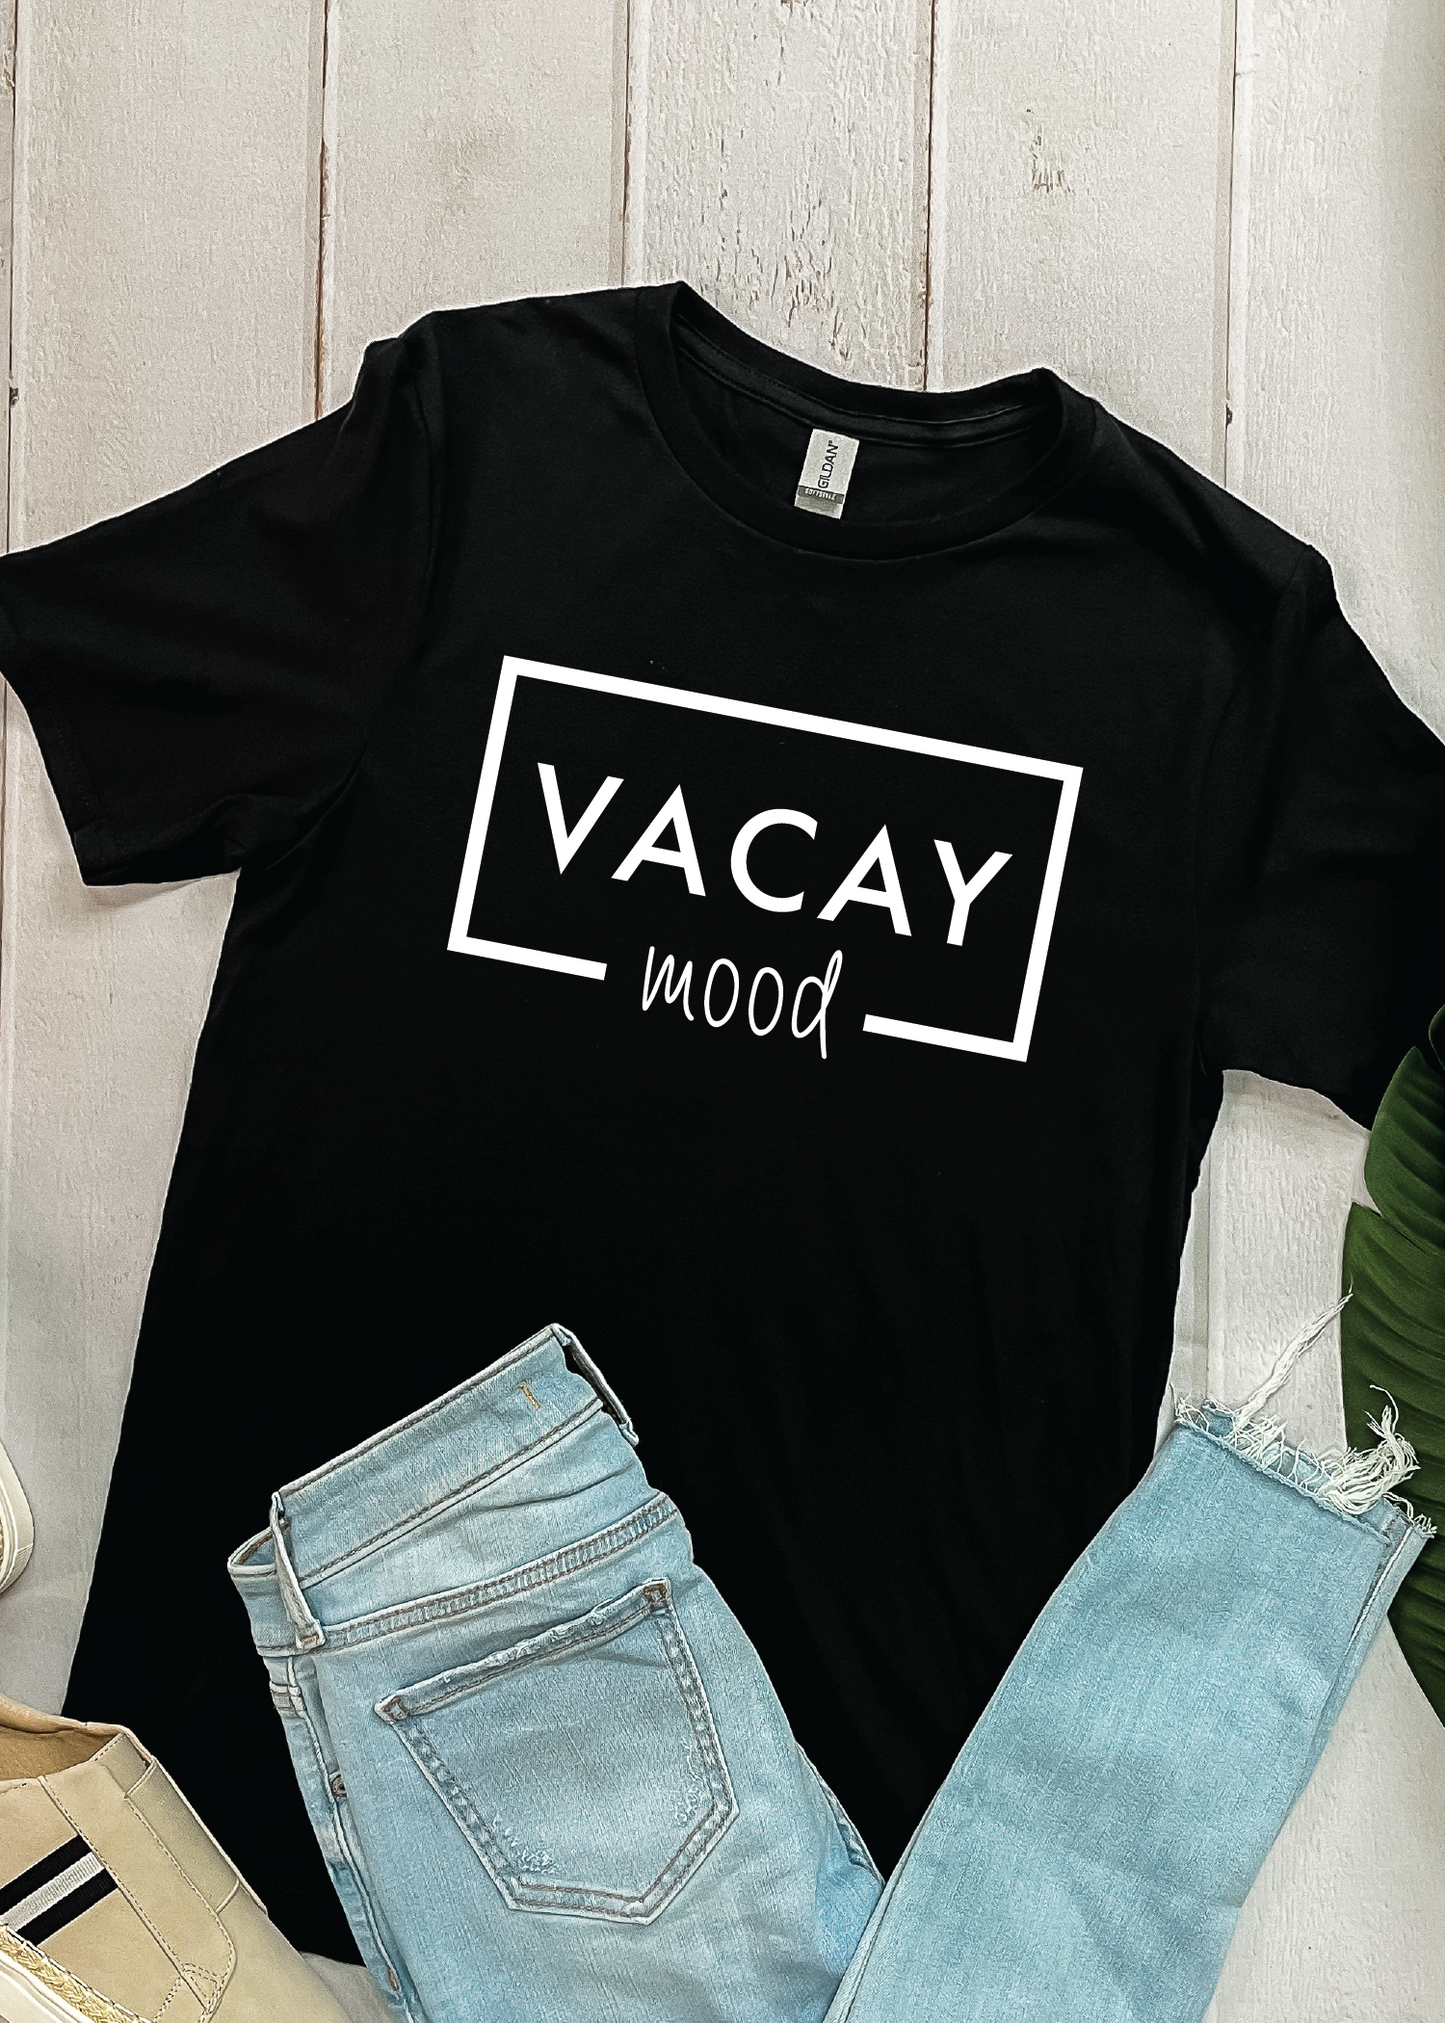 Vacay Mood - Graphic Tee